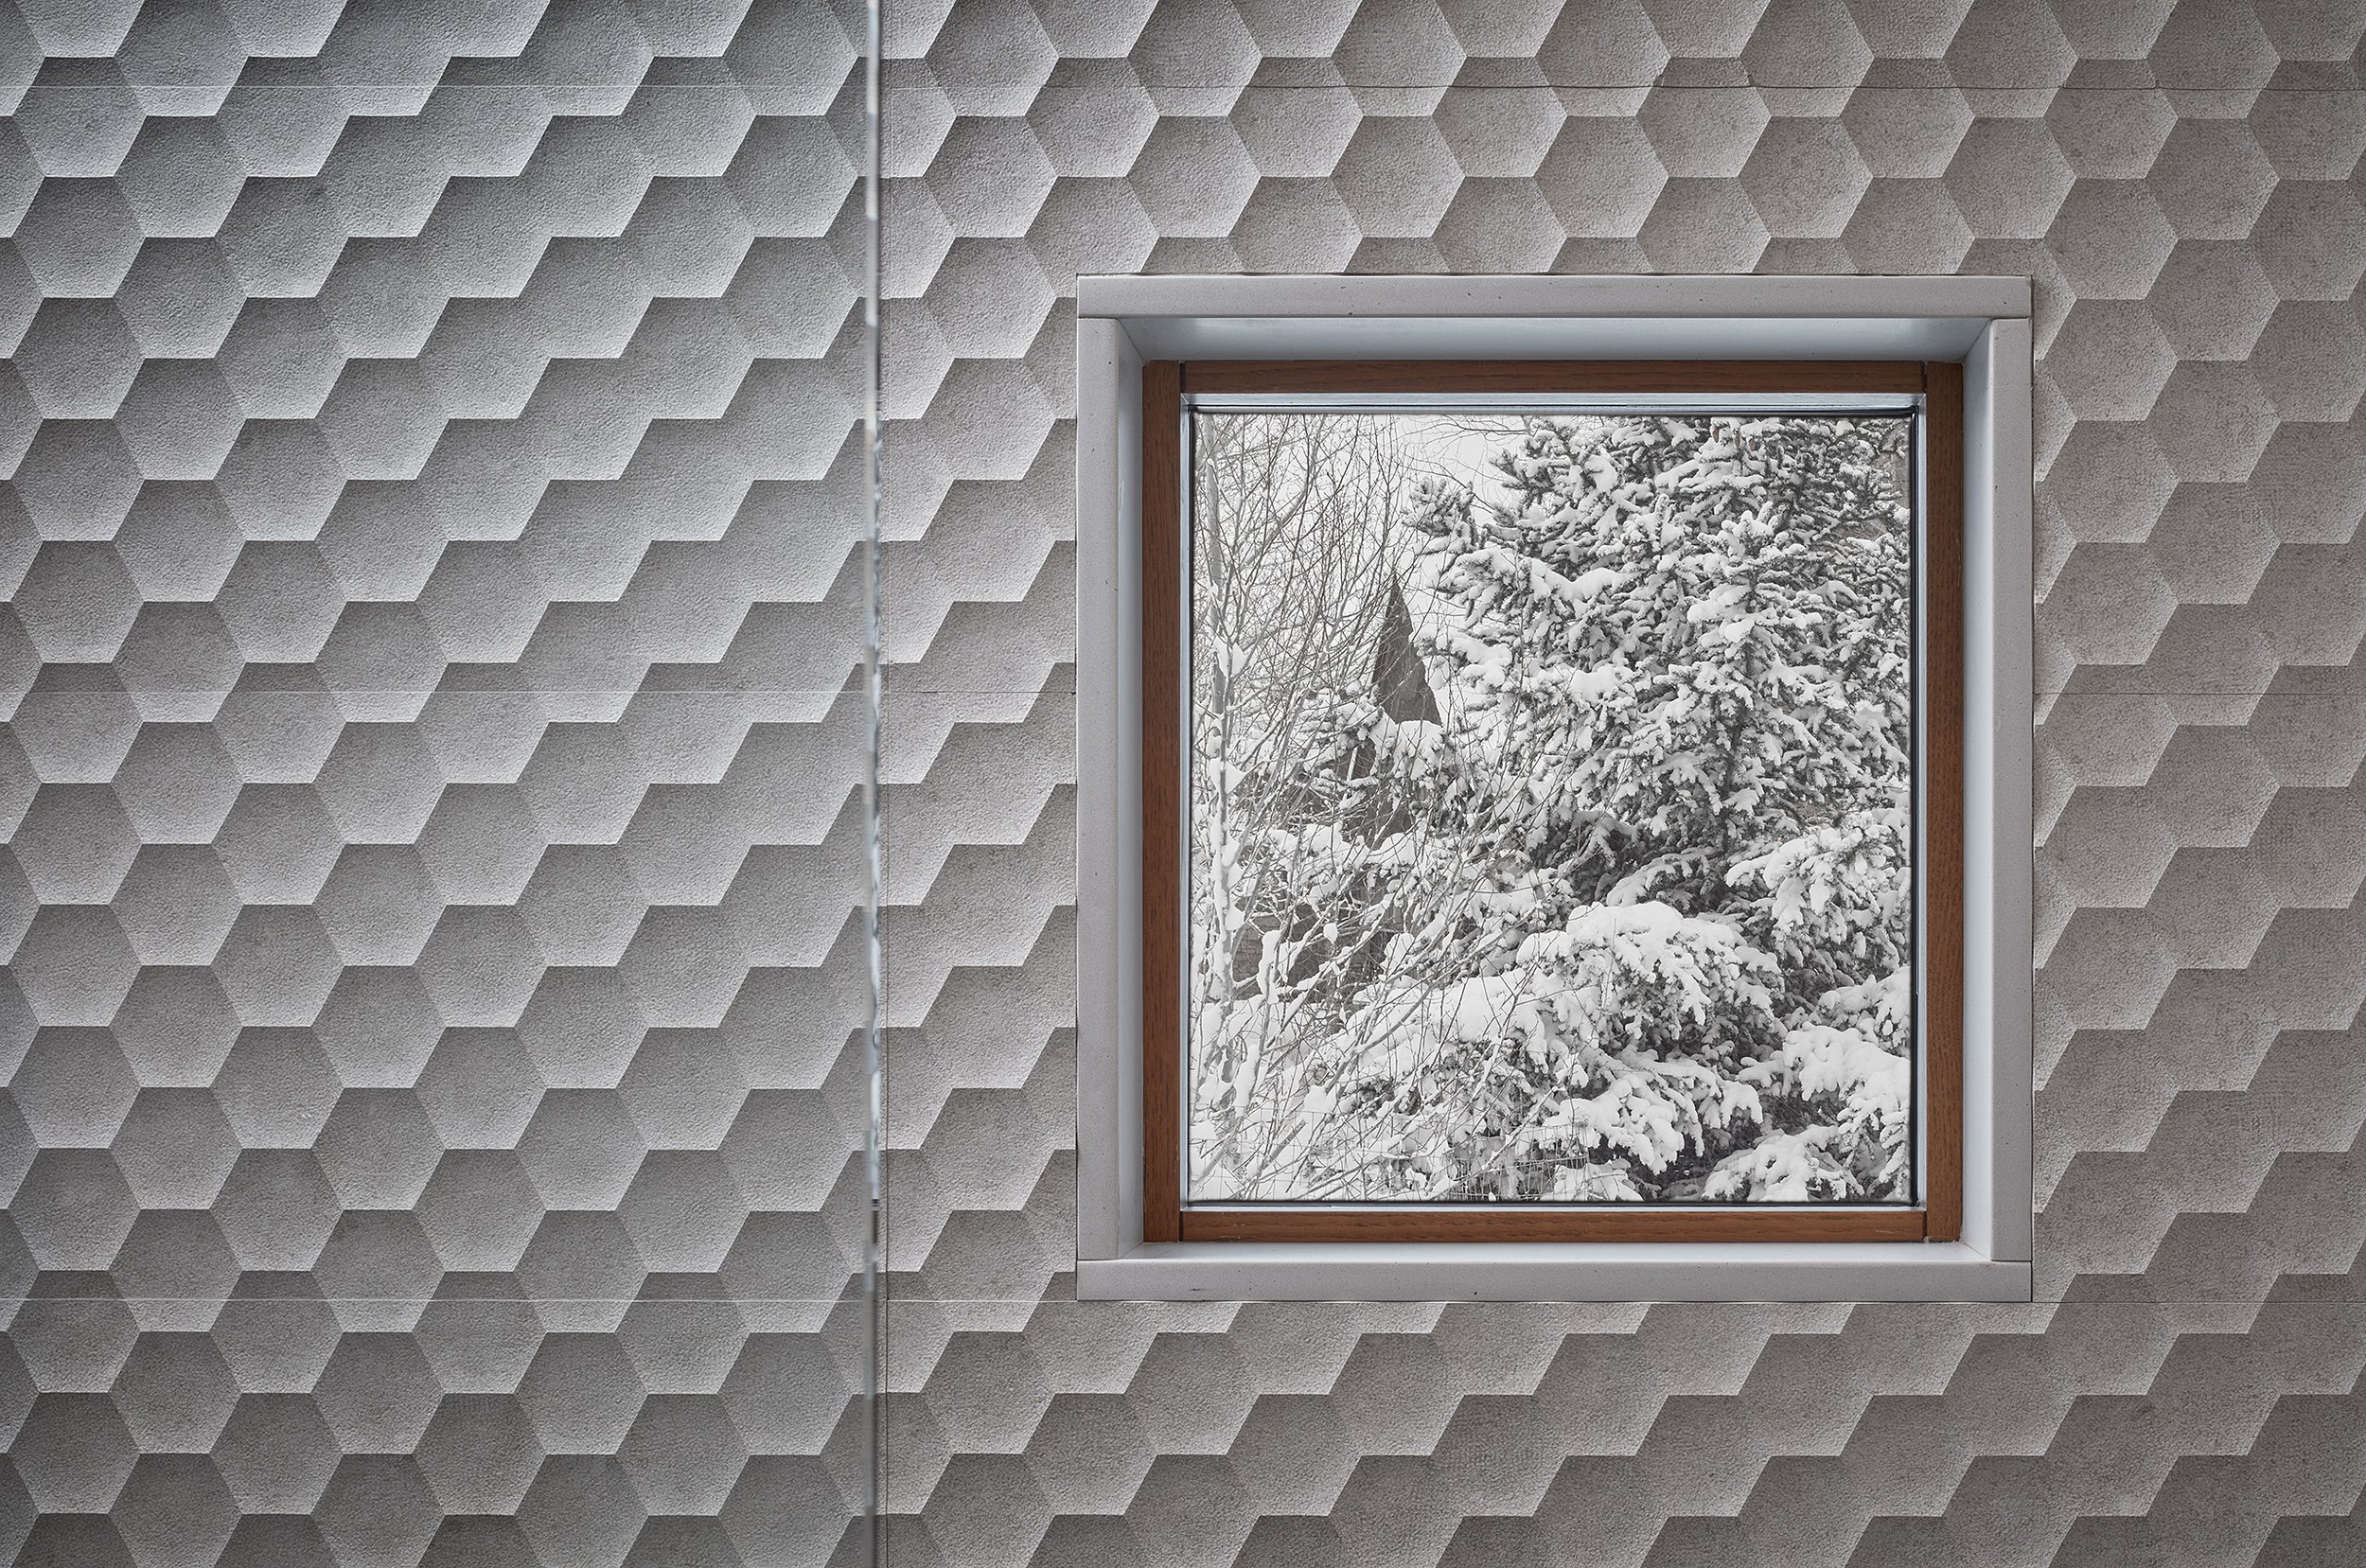 White hexagon tile and window detail